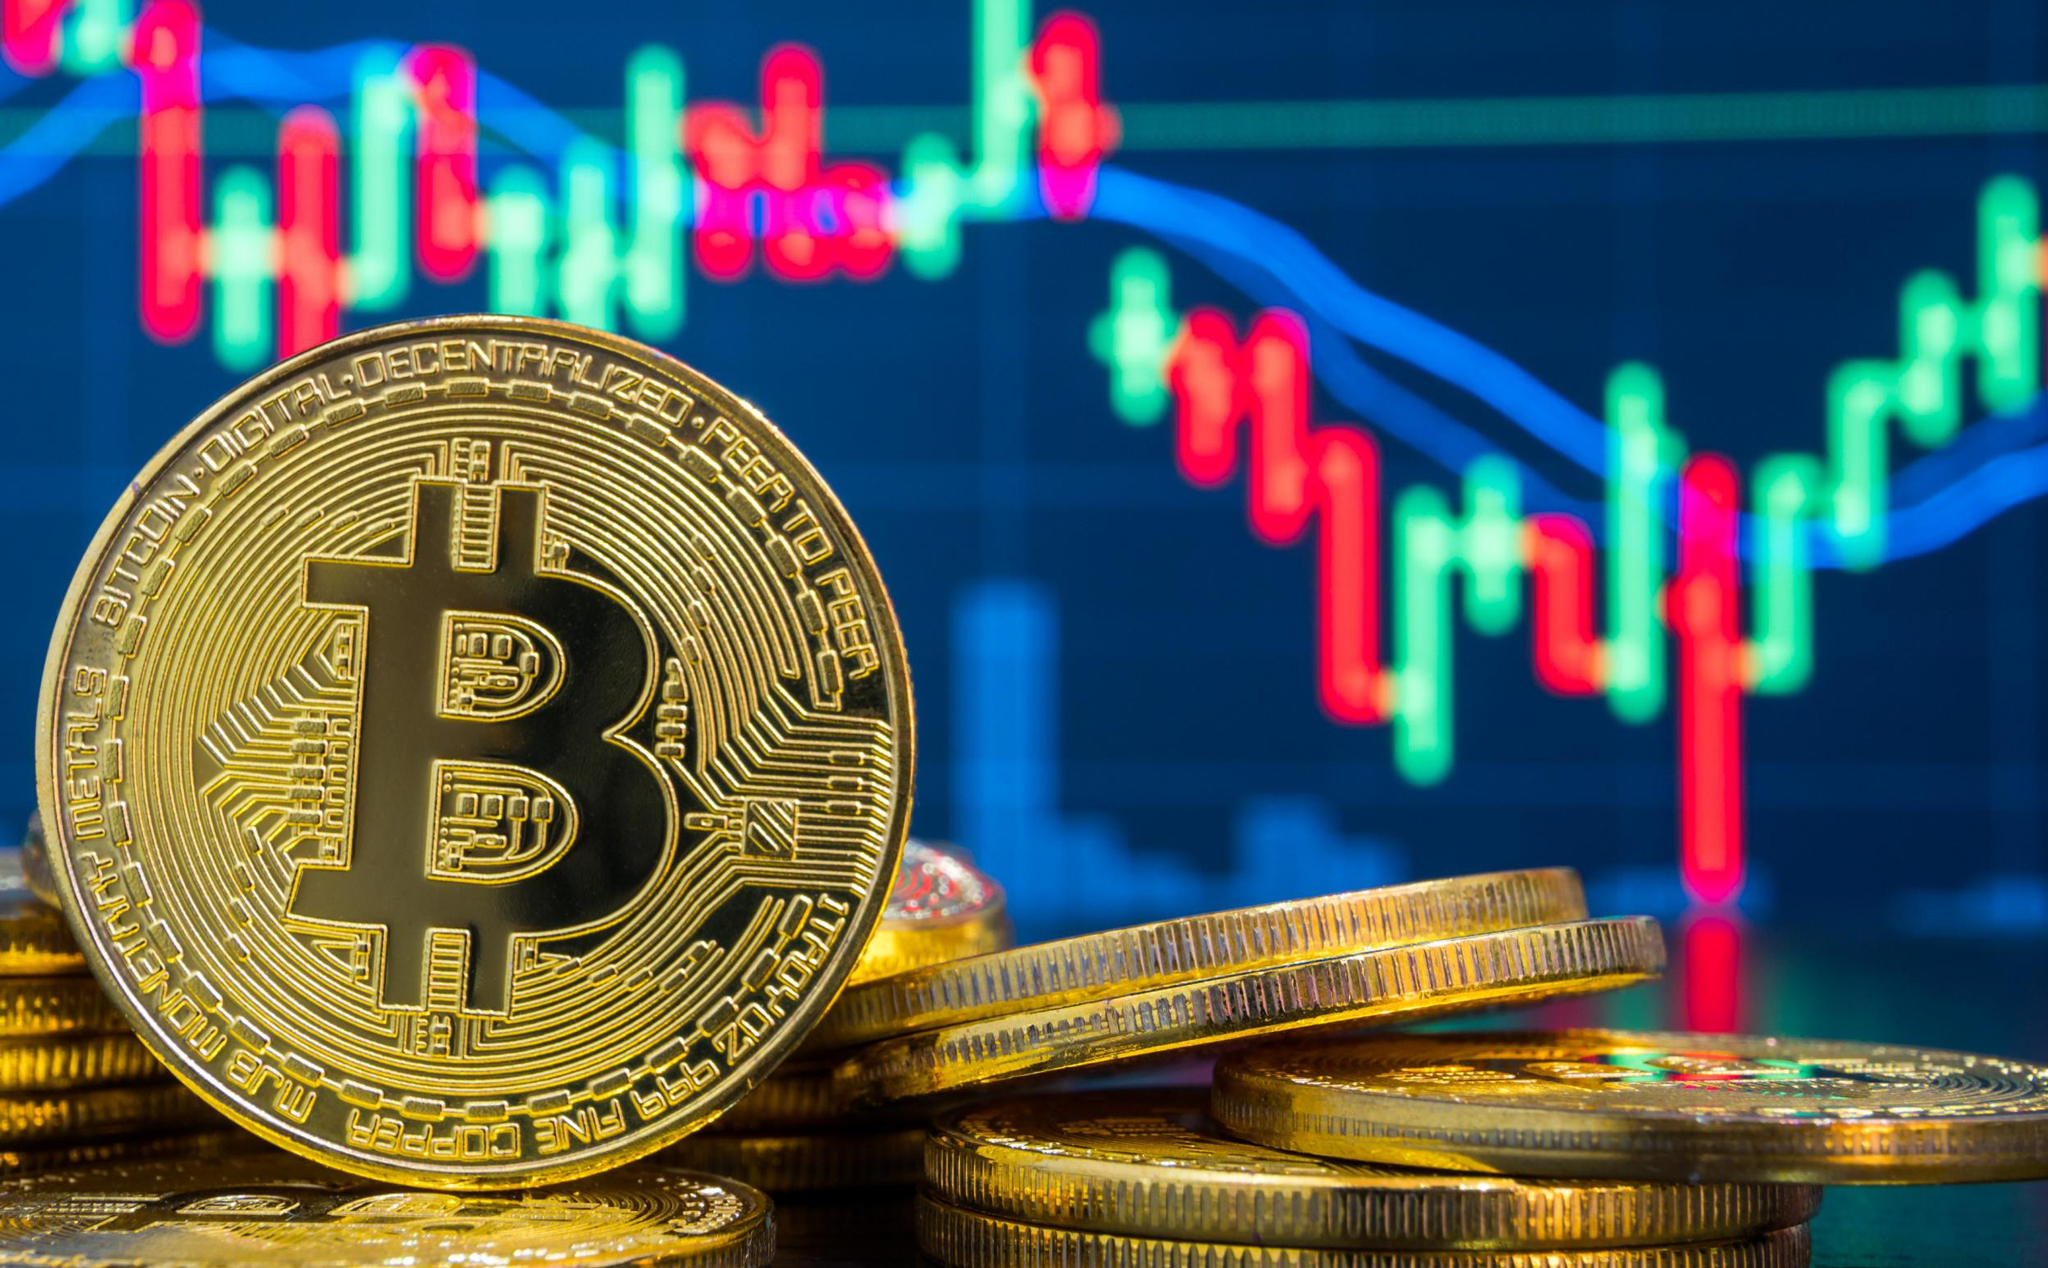 buy bitcoin with cash usd in paris